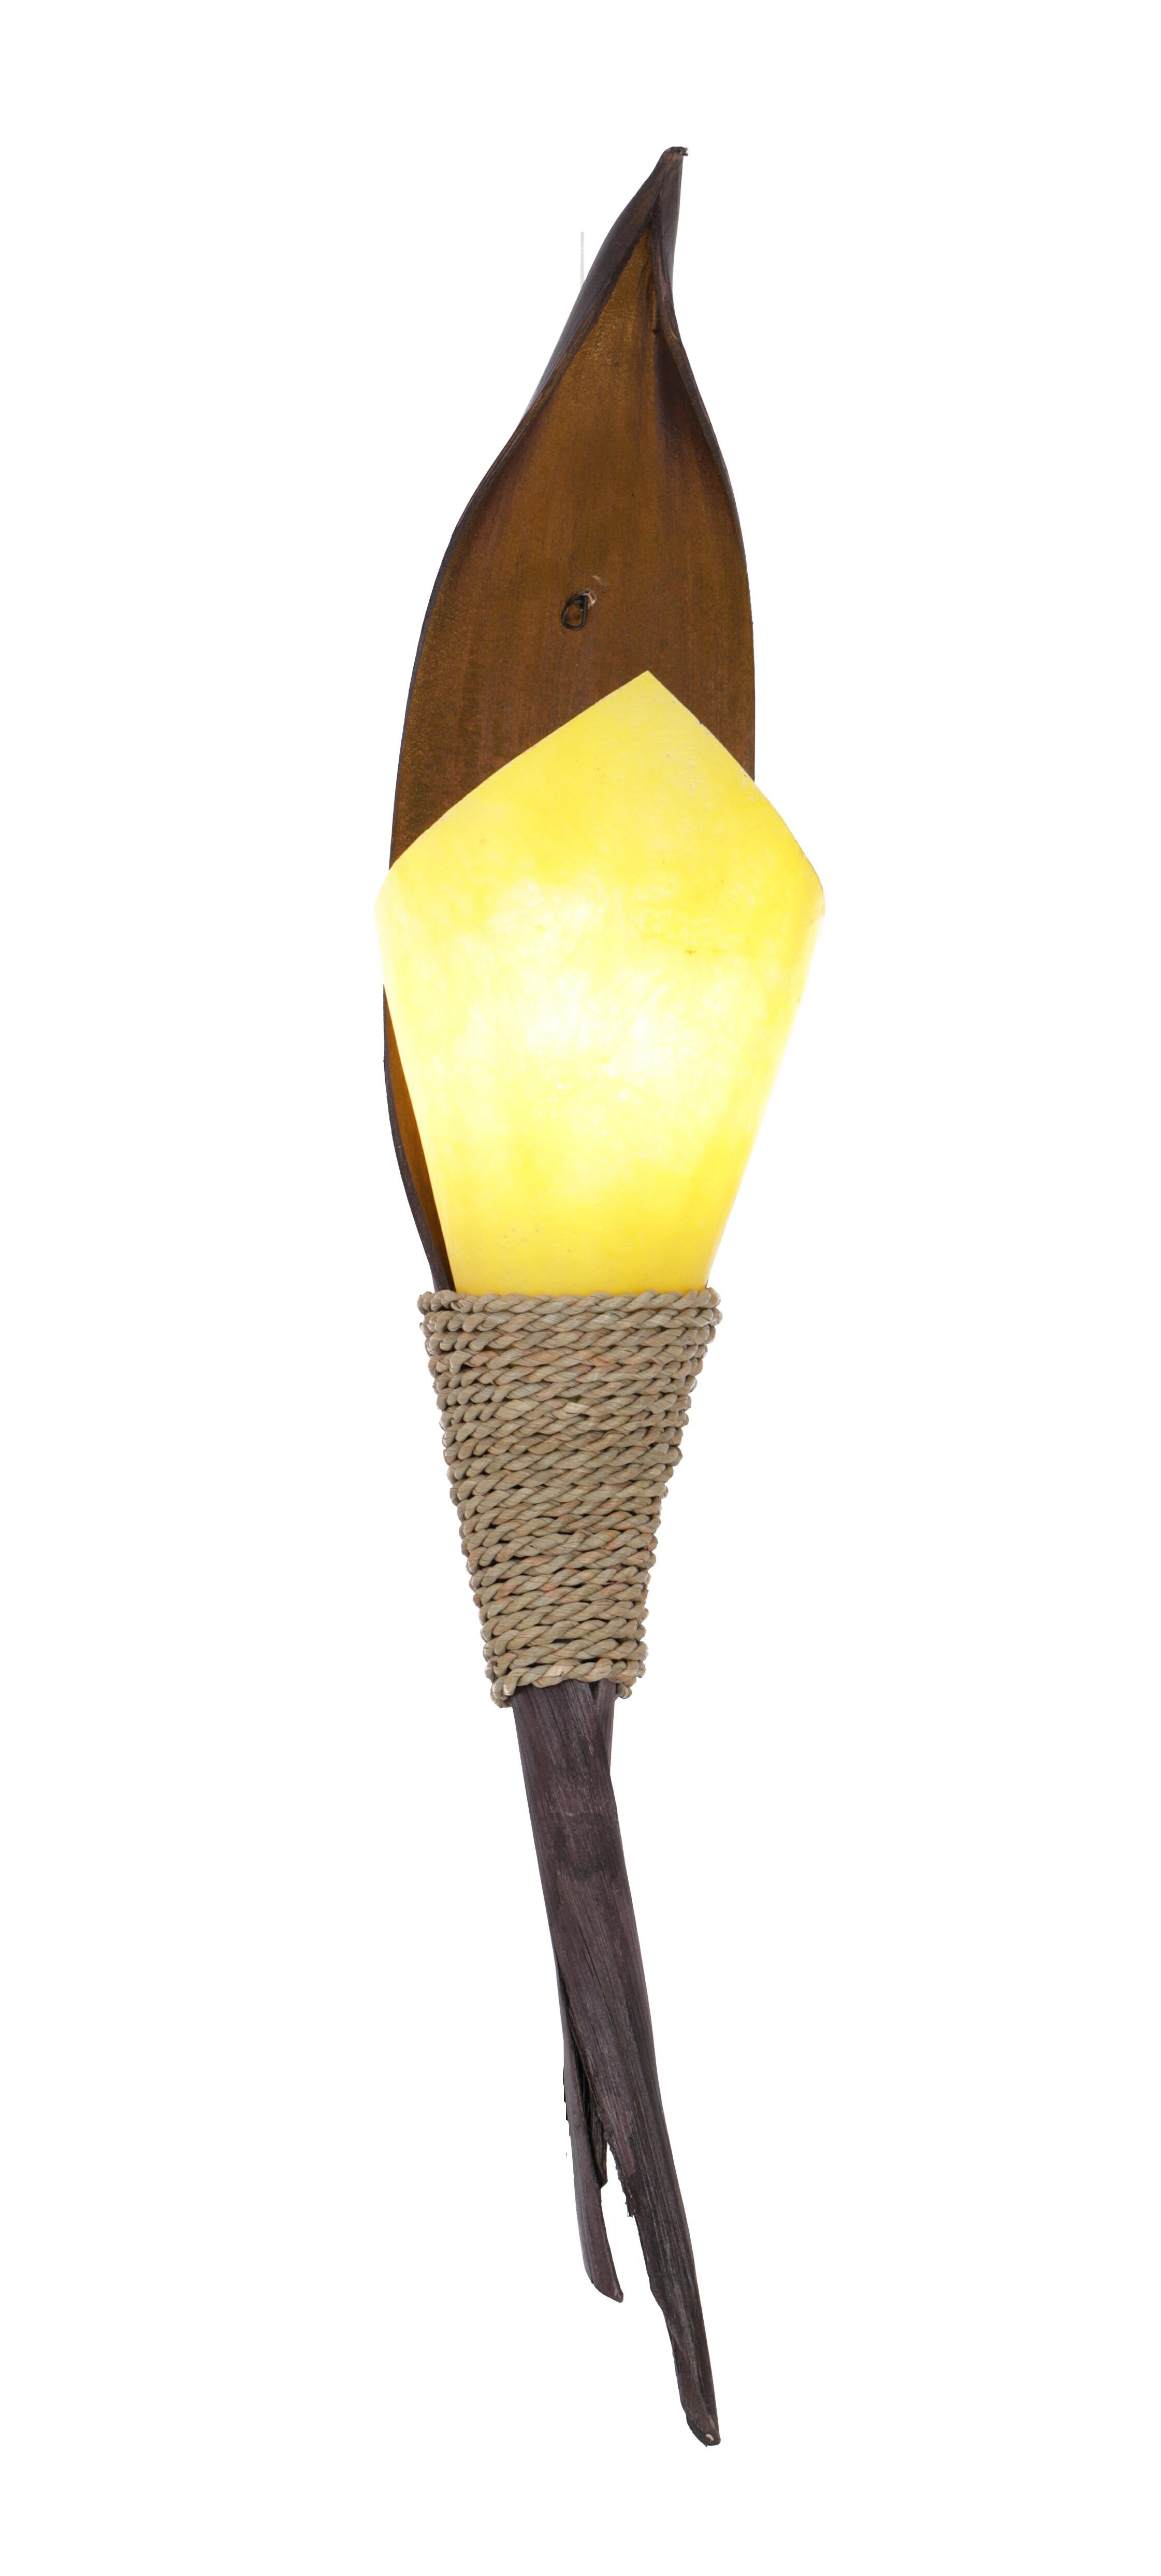 Guru-Shop Wandleuchte Leuchtmittel inklusive nicht in handgefertigt.., Palmena Palmenblatt Wandlampe, Bali Modell